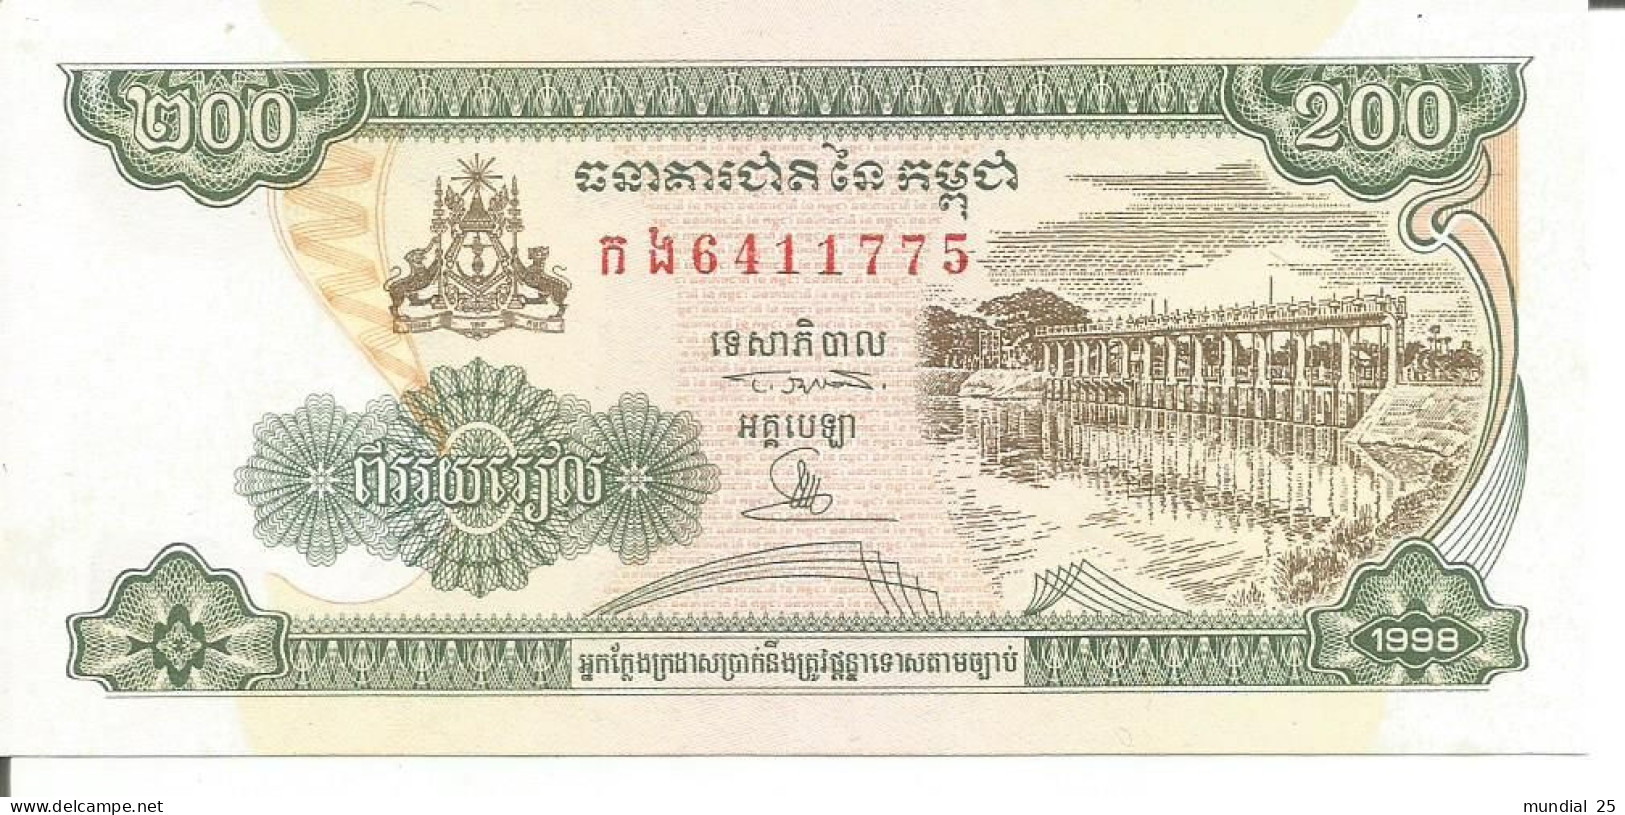 2 CAMBODIA NOTES 200 RIELS 1998 - Cambodja